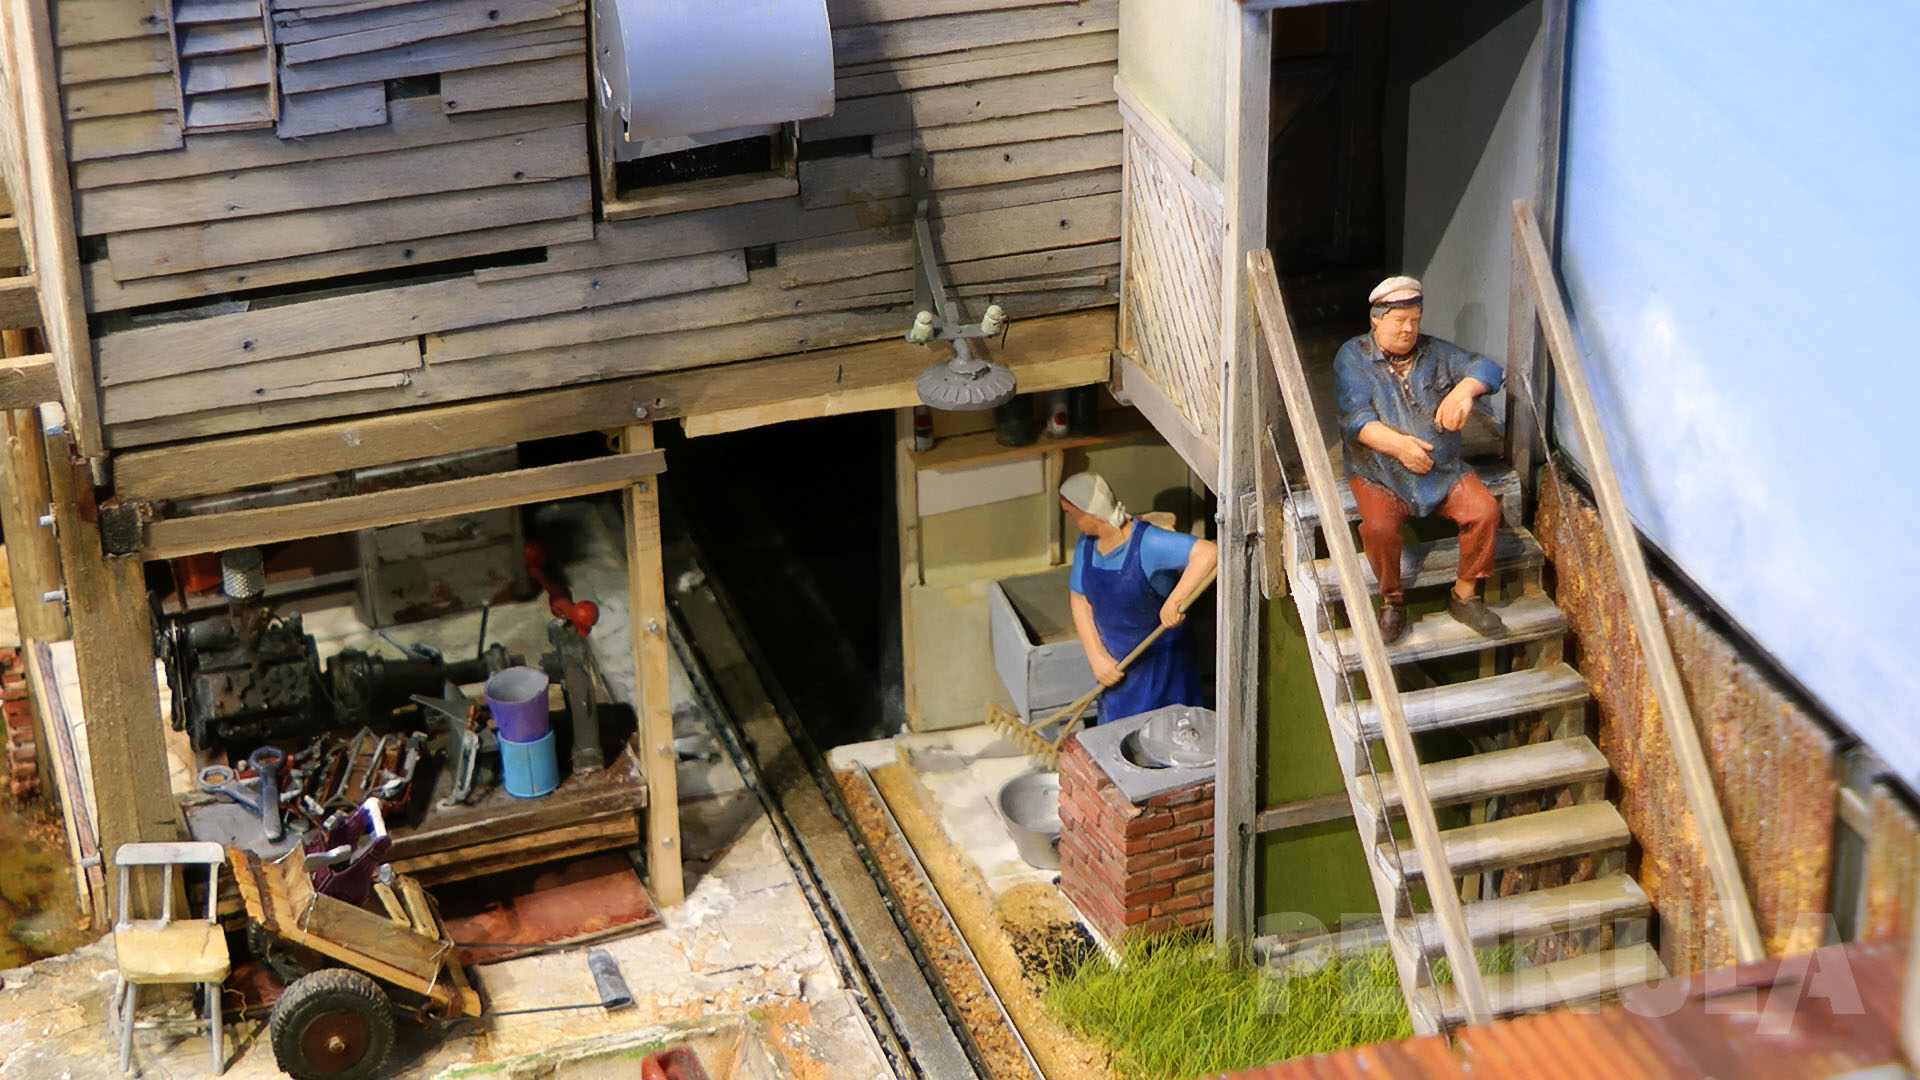 Feldbahn Modelleisenbahn Diorama vom Modellbau-Meister Kim Marsh aus Australien